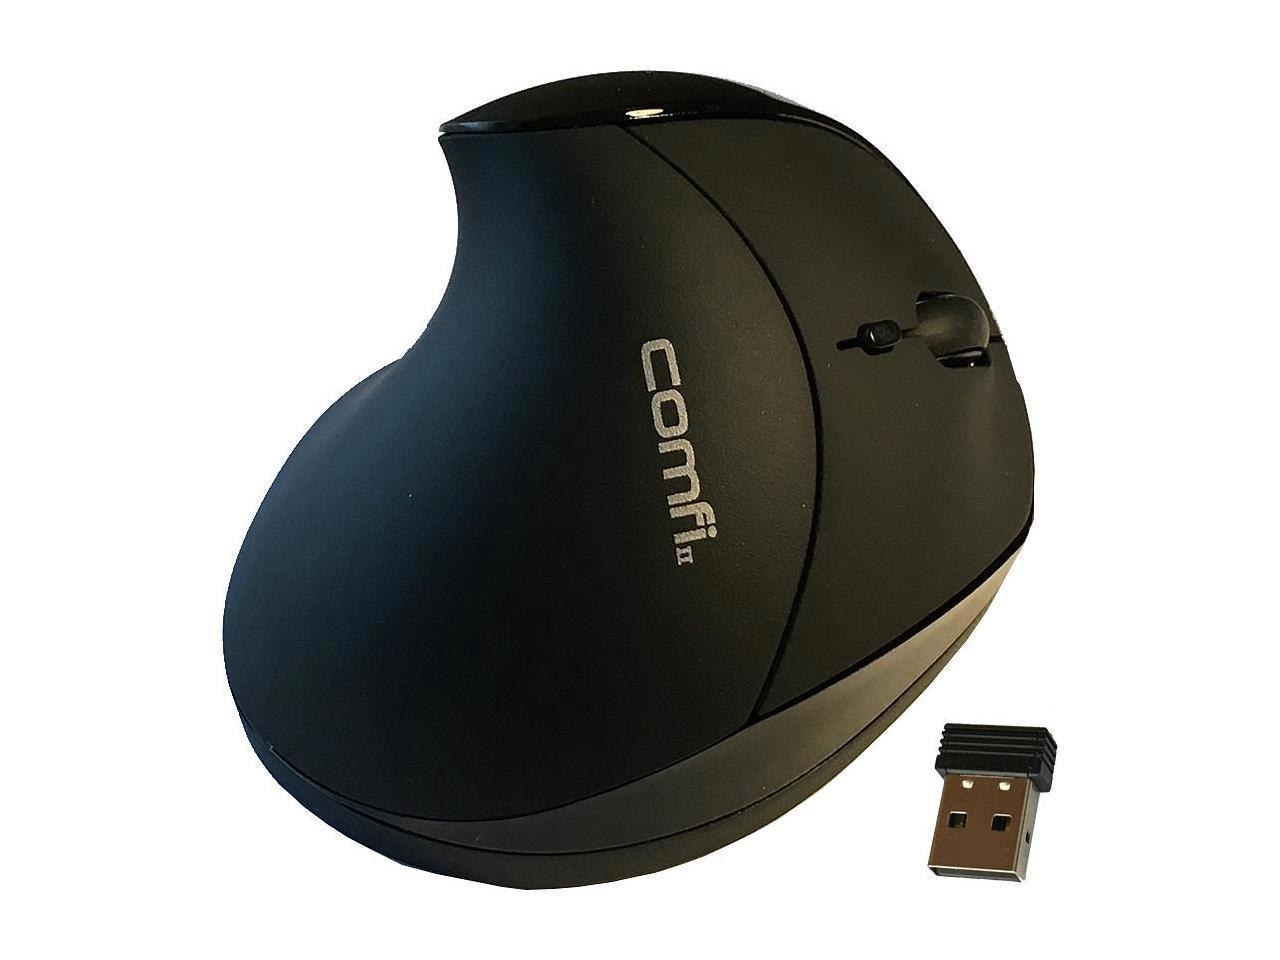 Ergoguys Ilg Comfi Ii Wireless Ergonomic Computer Mouse In Black